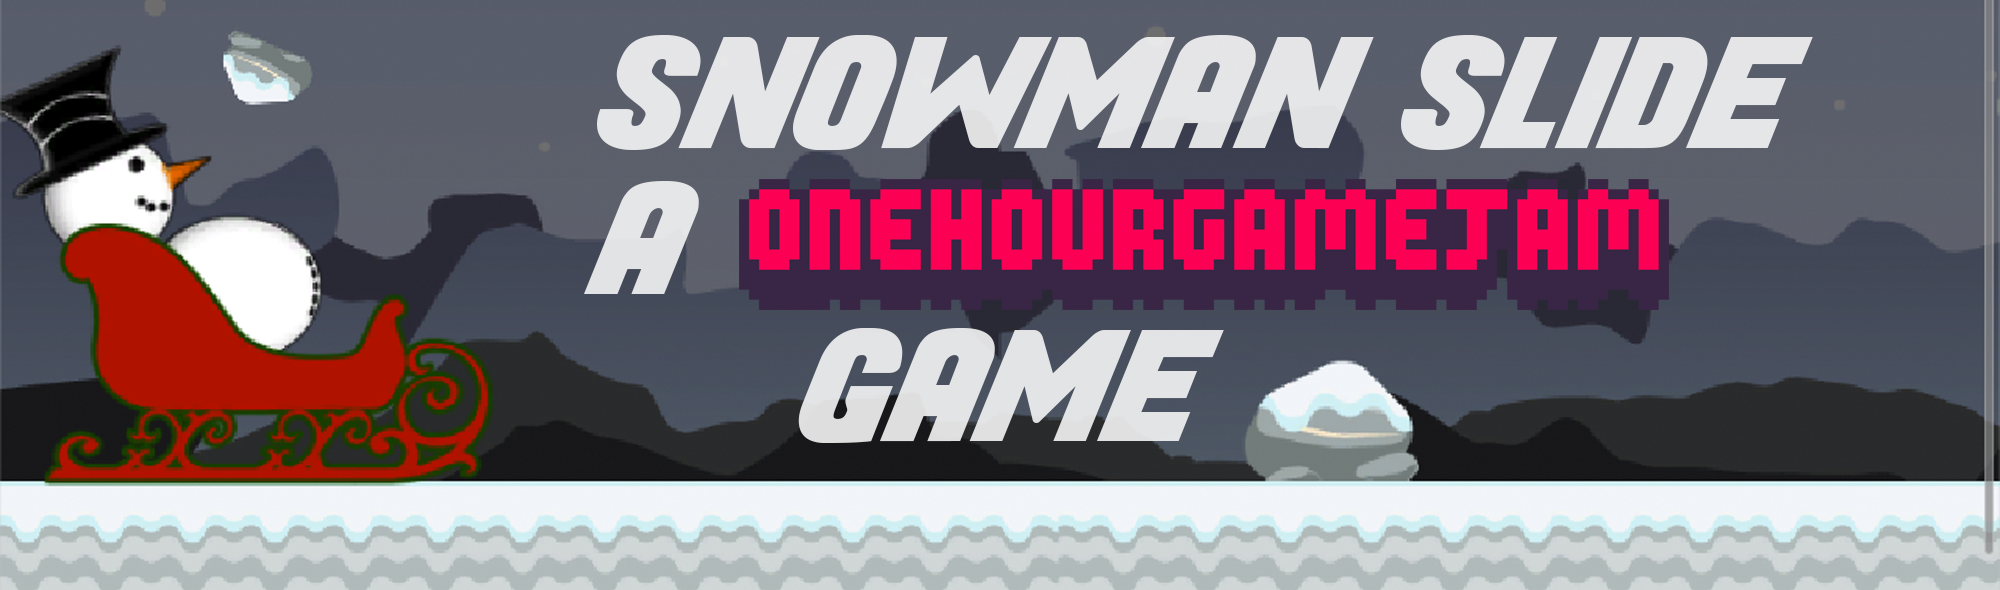 Snowman Slide || One Hour Game Jam 138